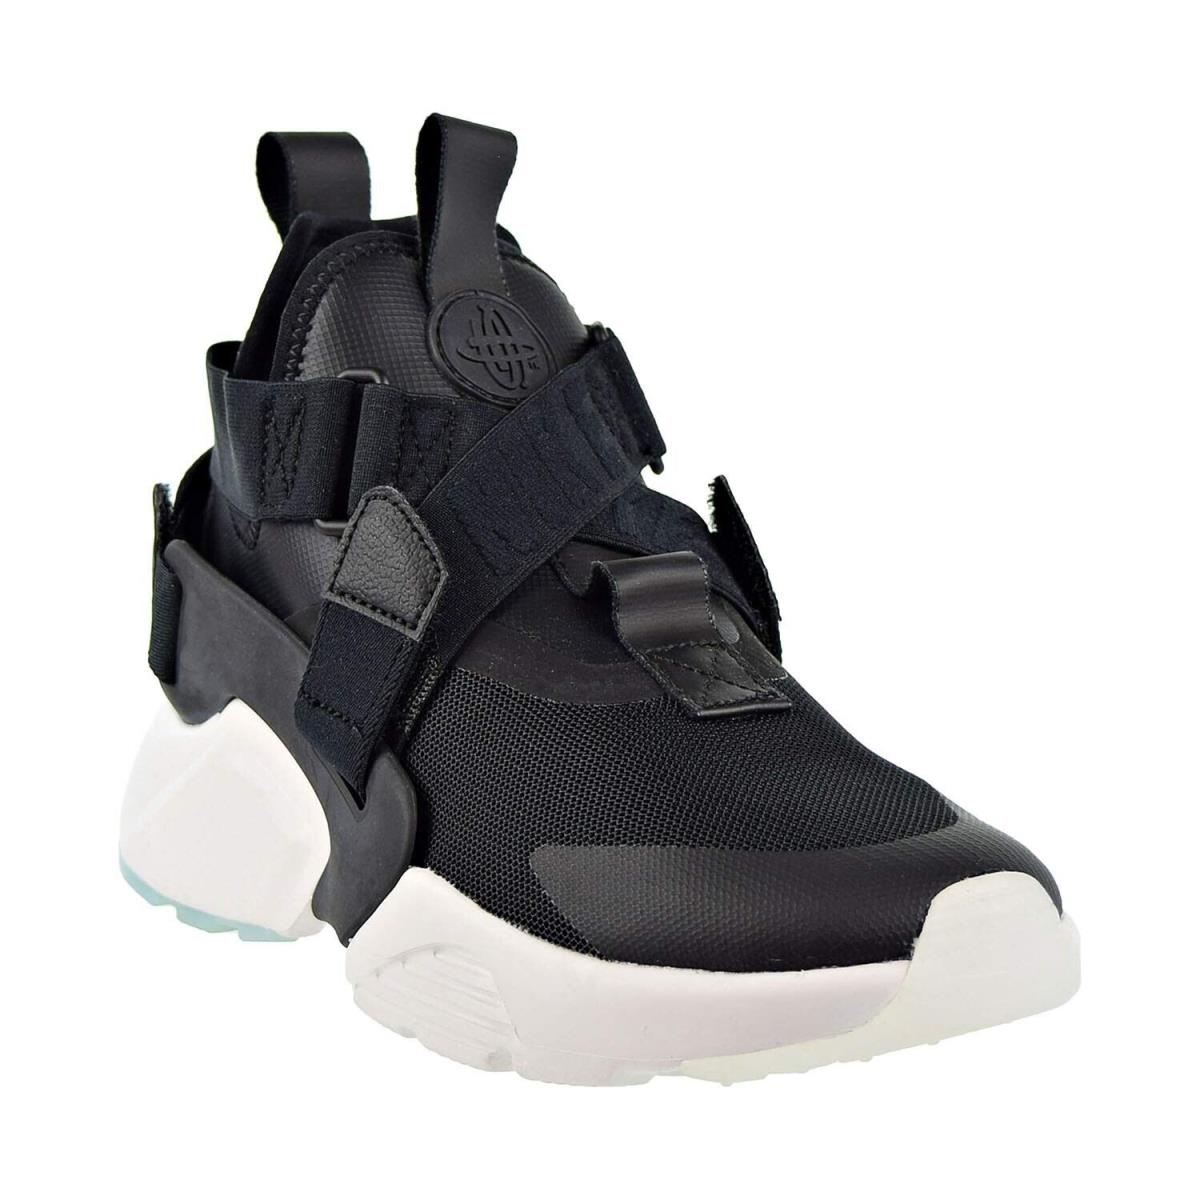 Nike Womens Air Huarache City AH6787-008 Black Running Sneaker Shoes Size 13 - Black